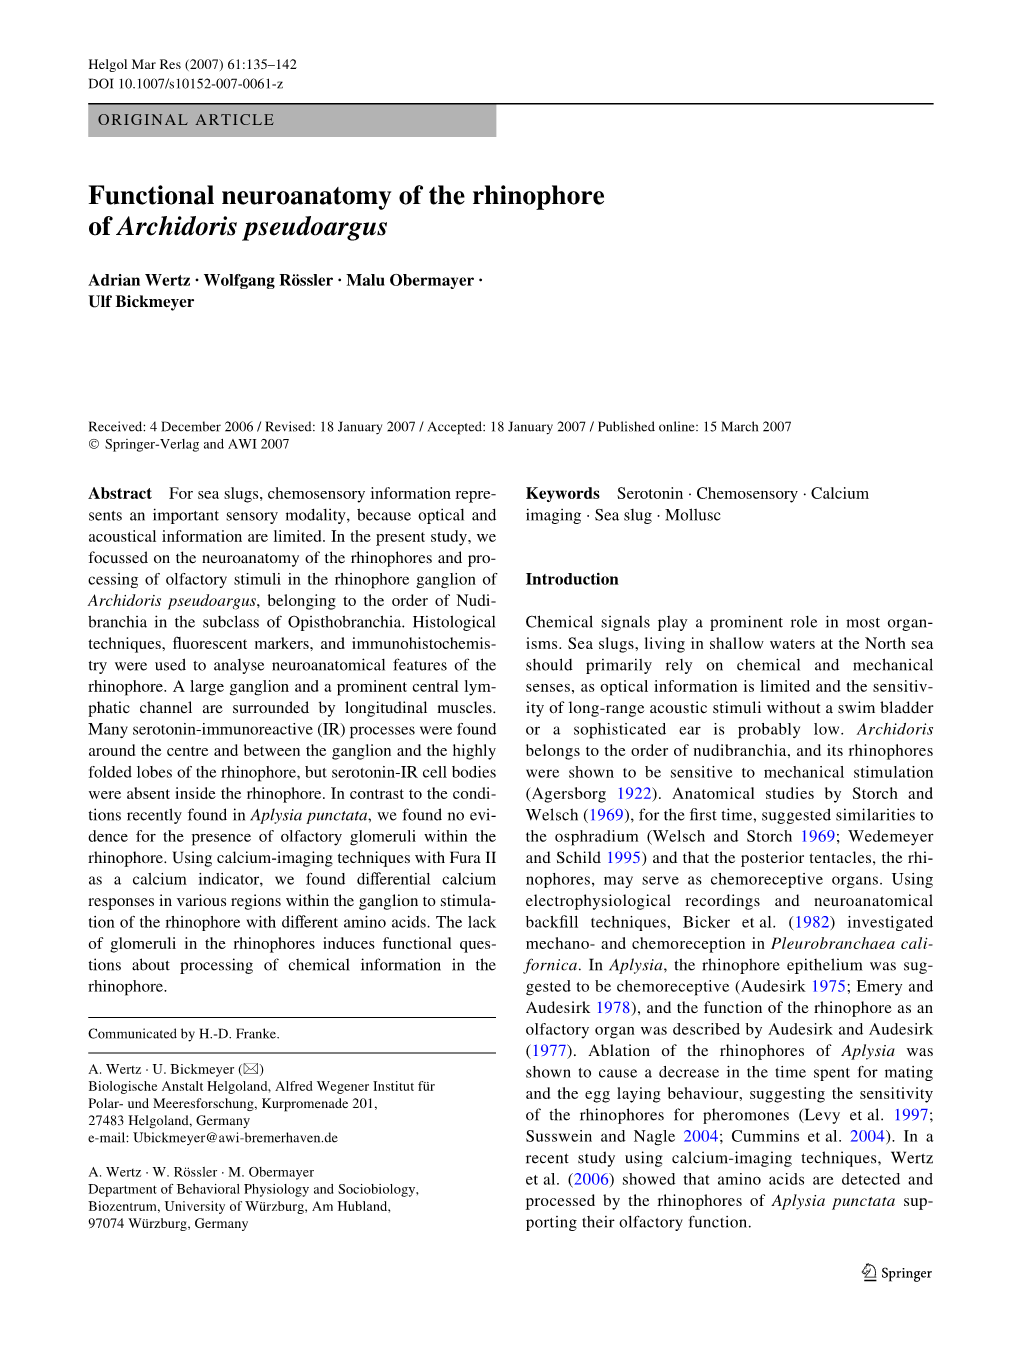 Functional Neuroanatomy of the Rhinophore of Archidoris Pseudoargus